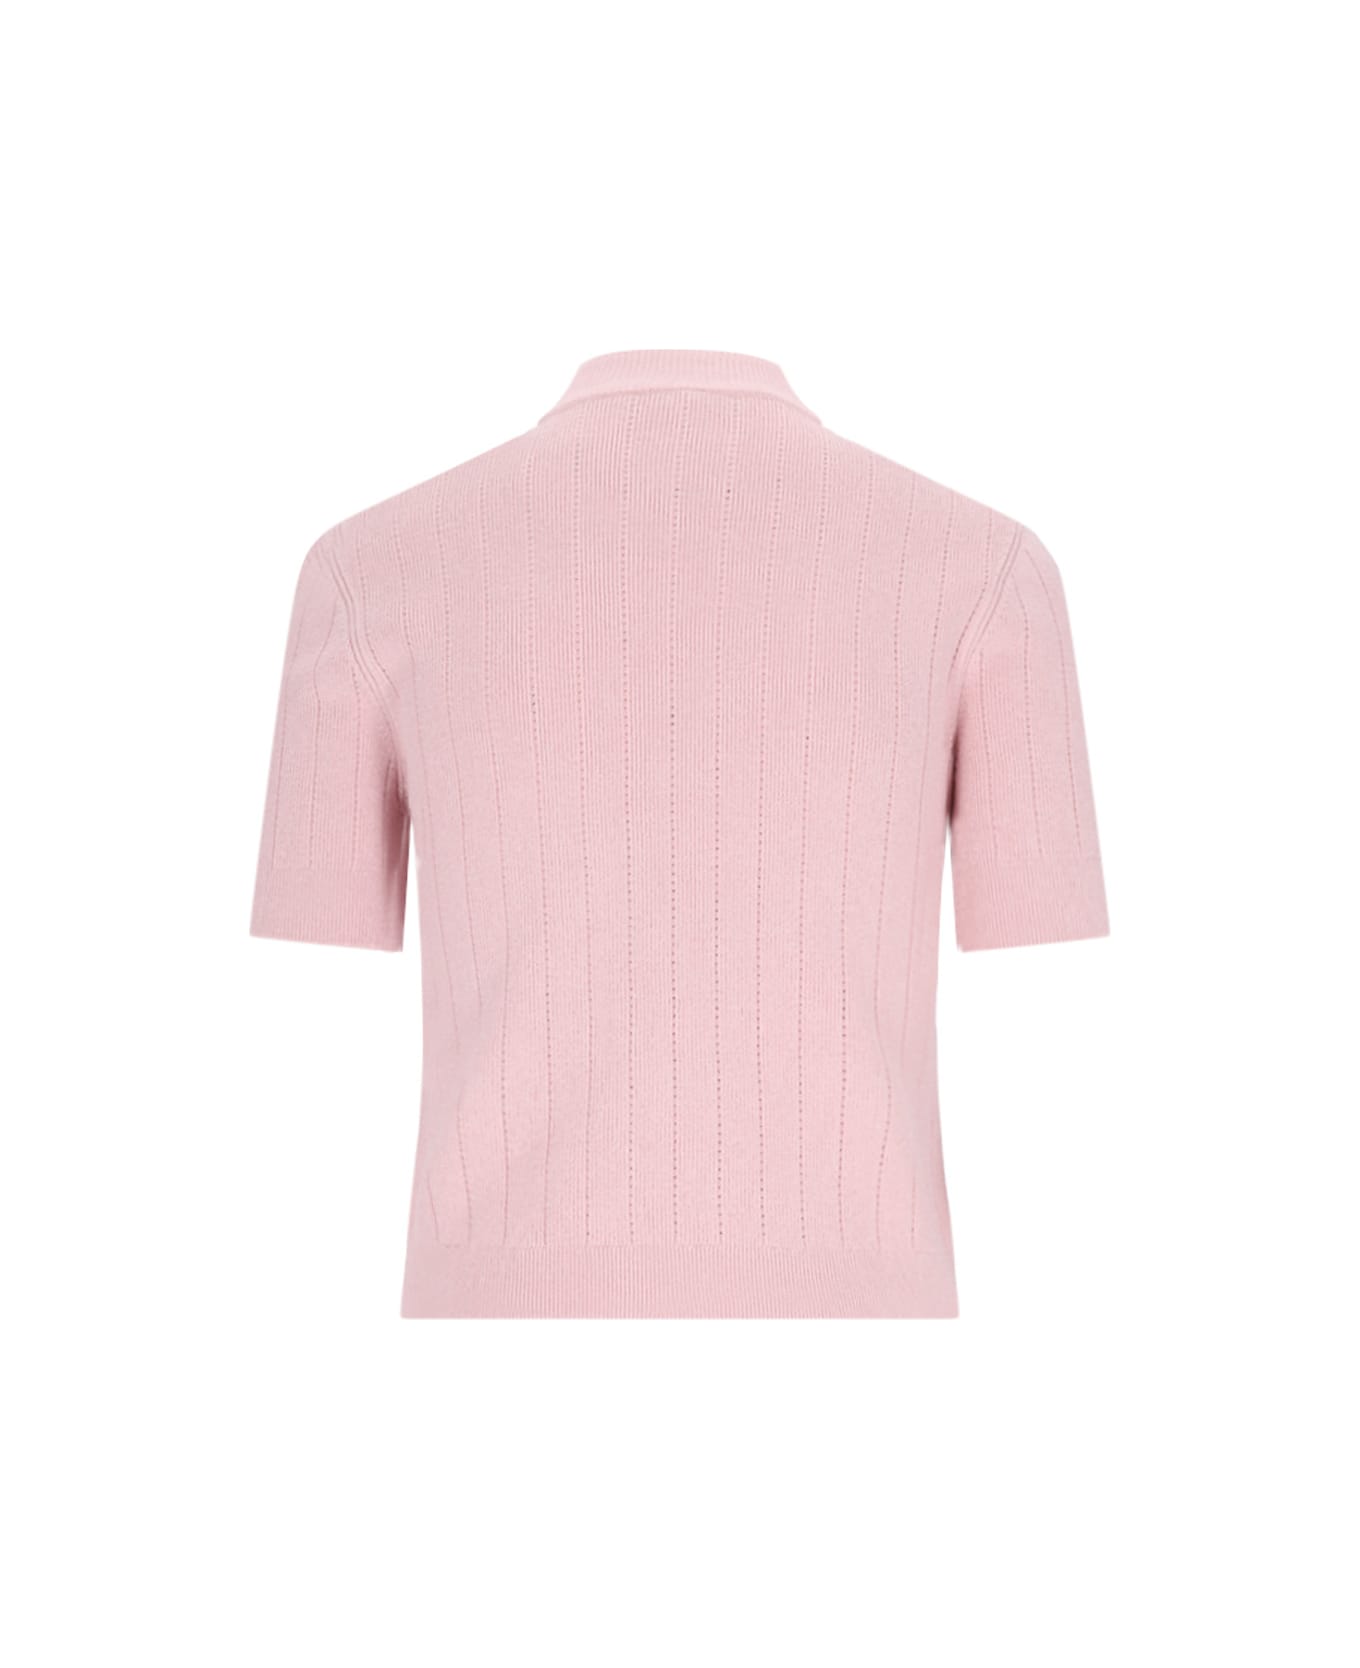 Balmain Knitted Cardigan - Pink カーディガン